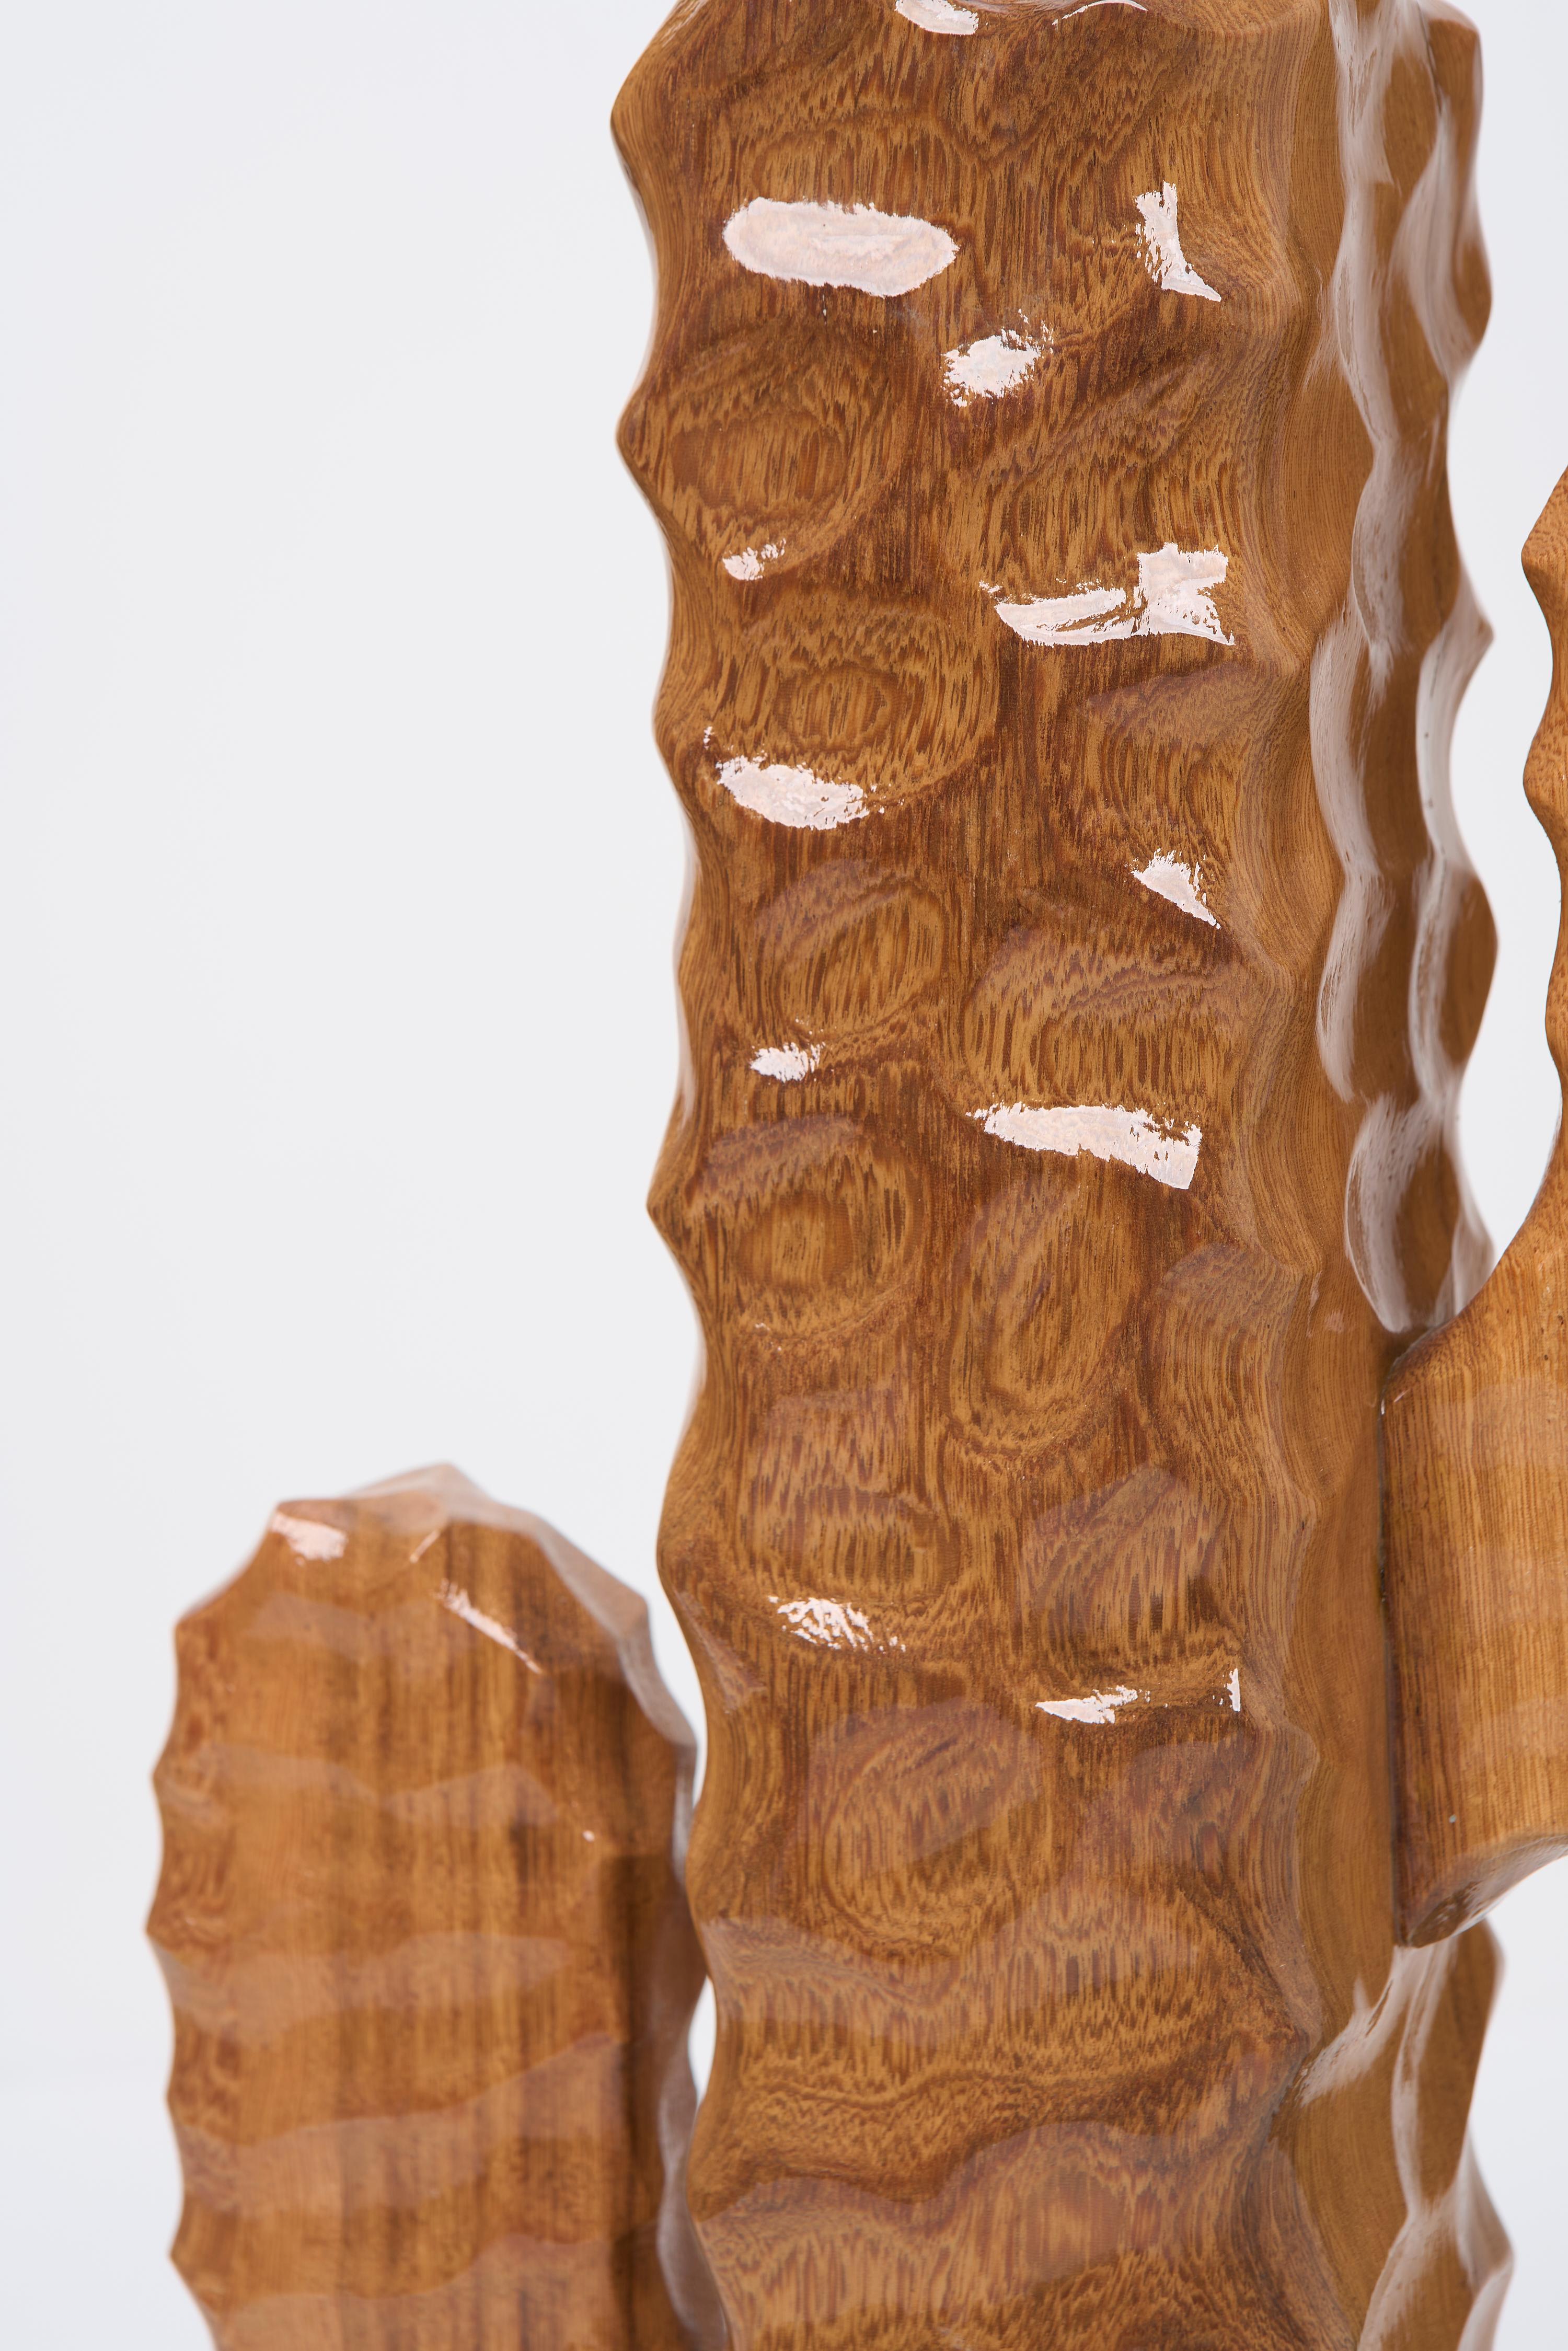 Brazilian Mandacaru Series, Wooden Cactus Small Floor Sculpture For Sale